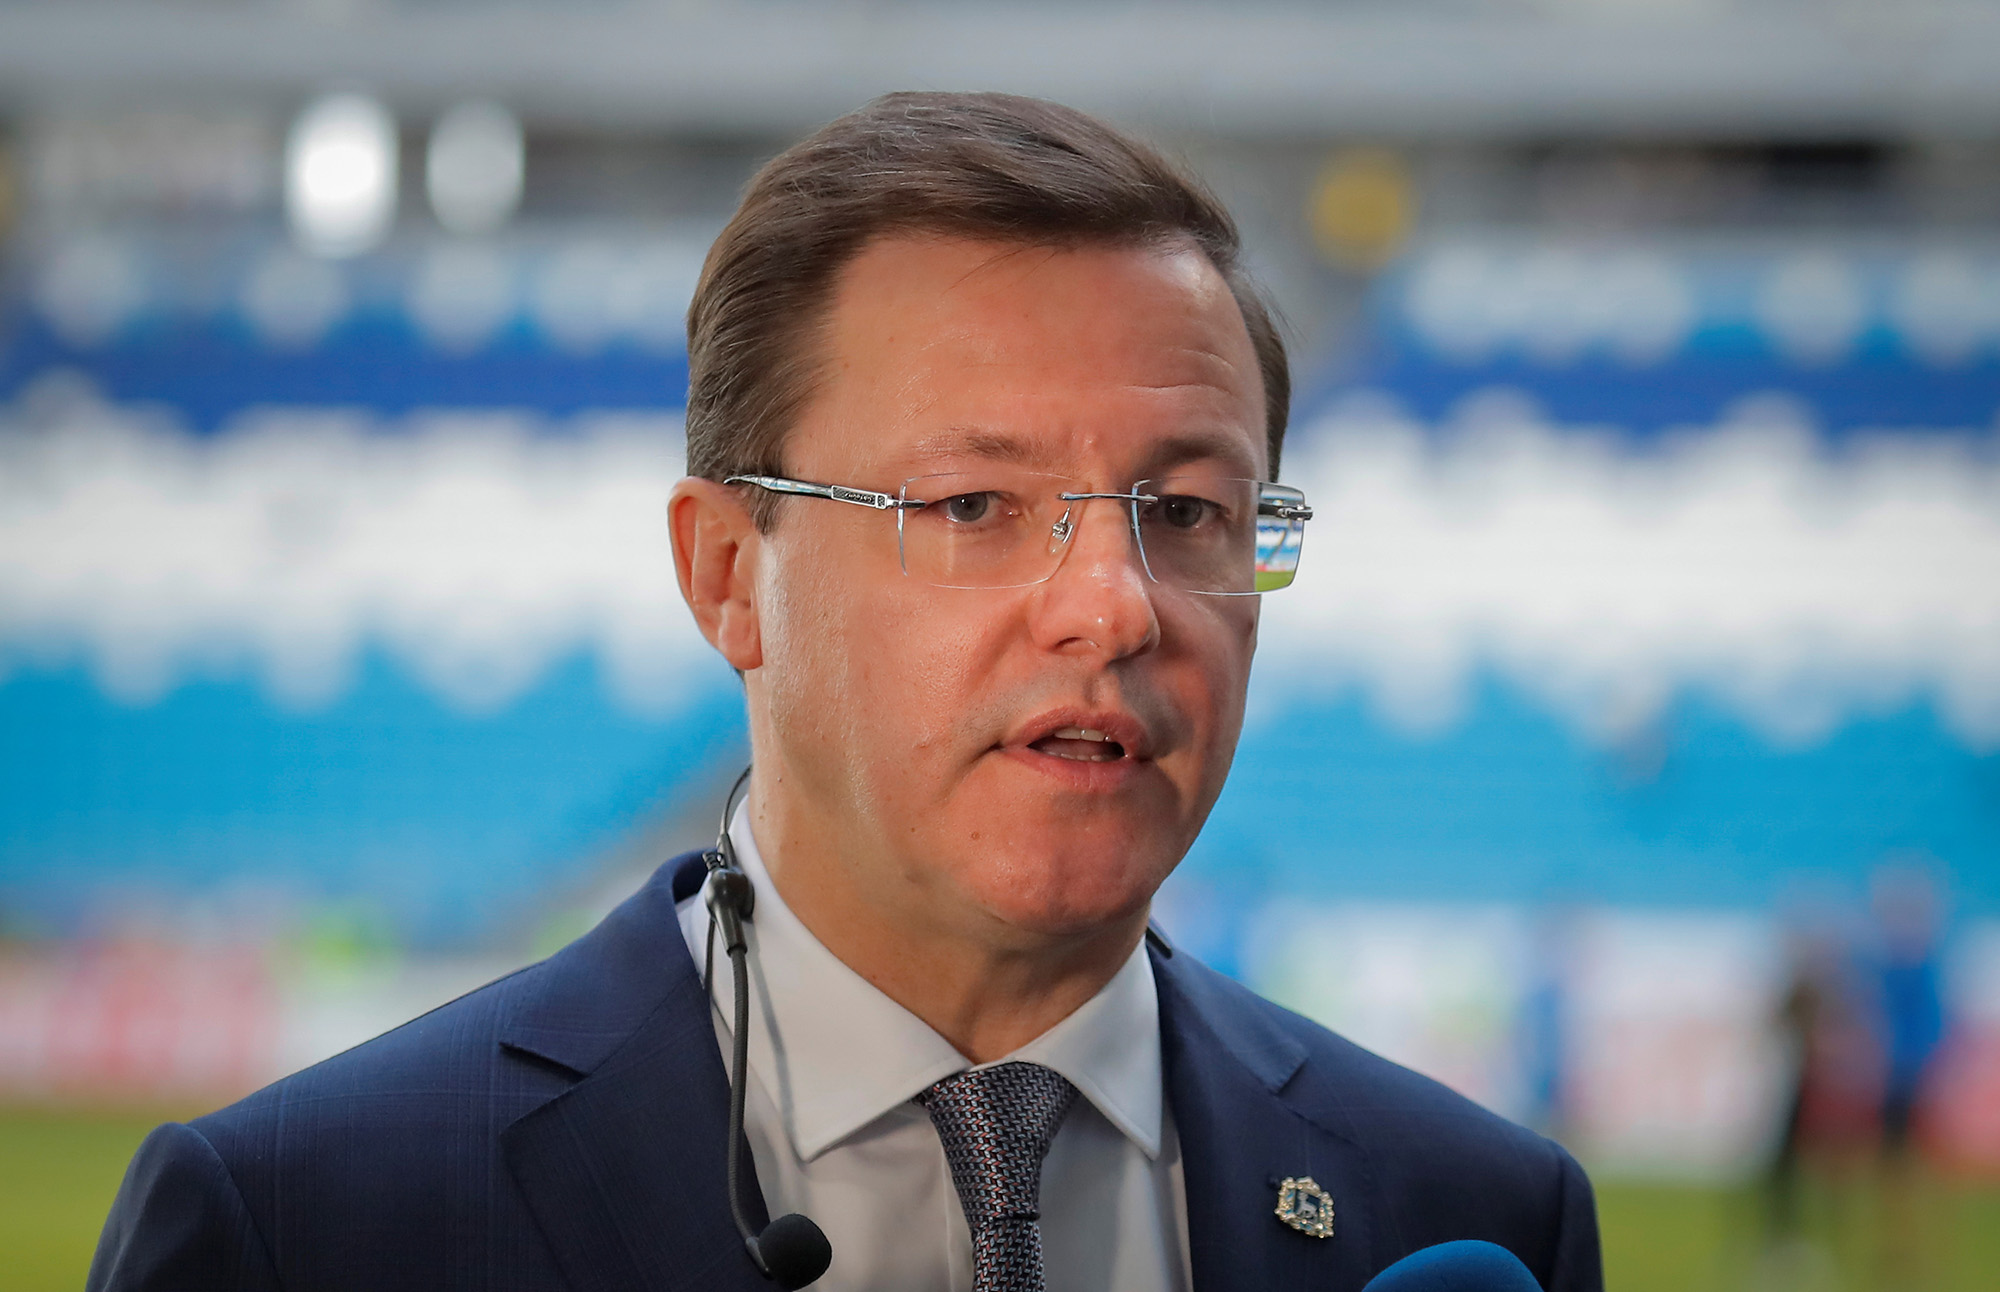 Dmitry Azarov, the acting governor of Samara region, speaks inside the Samara Arena stadium in Samara, Russia, on May 6, 2018.